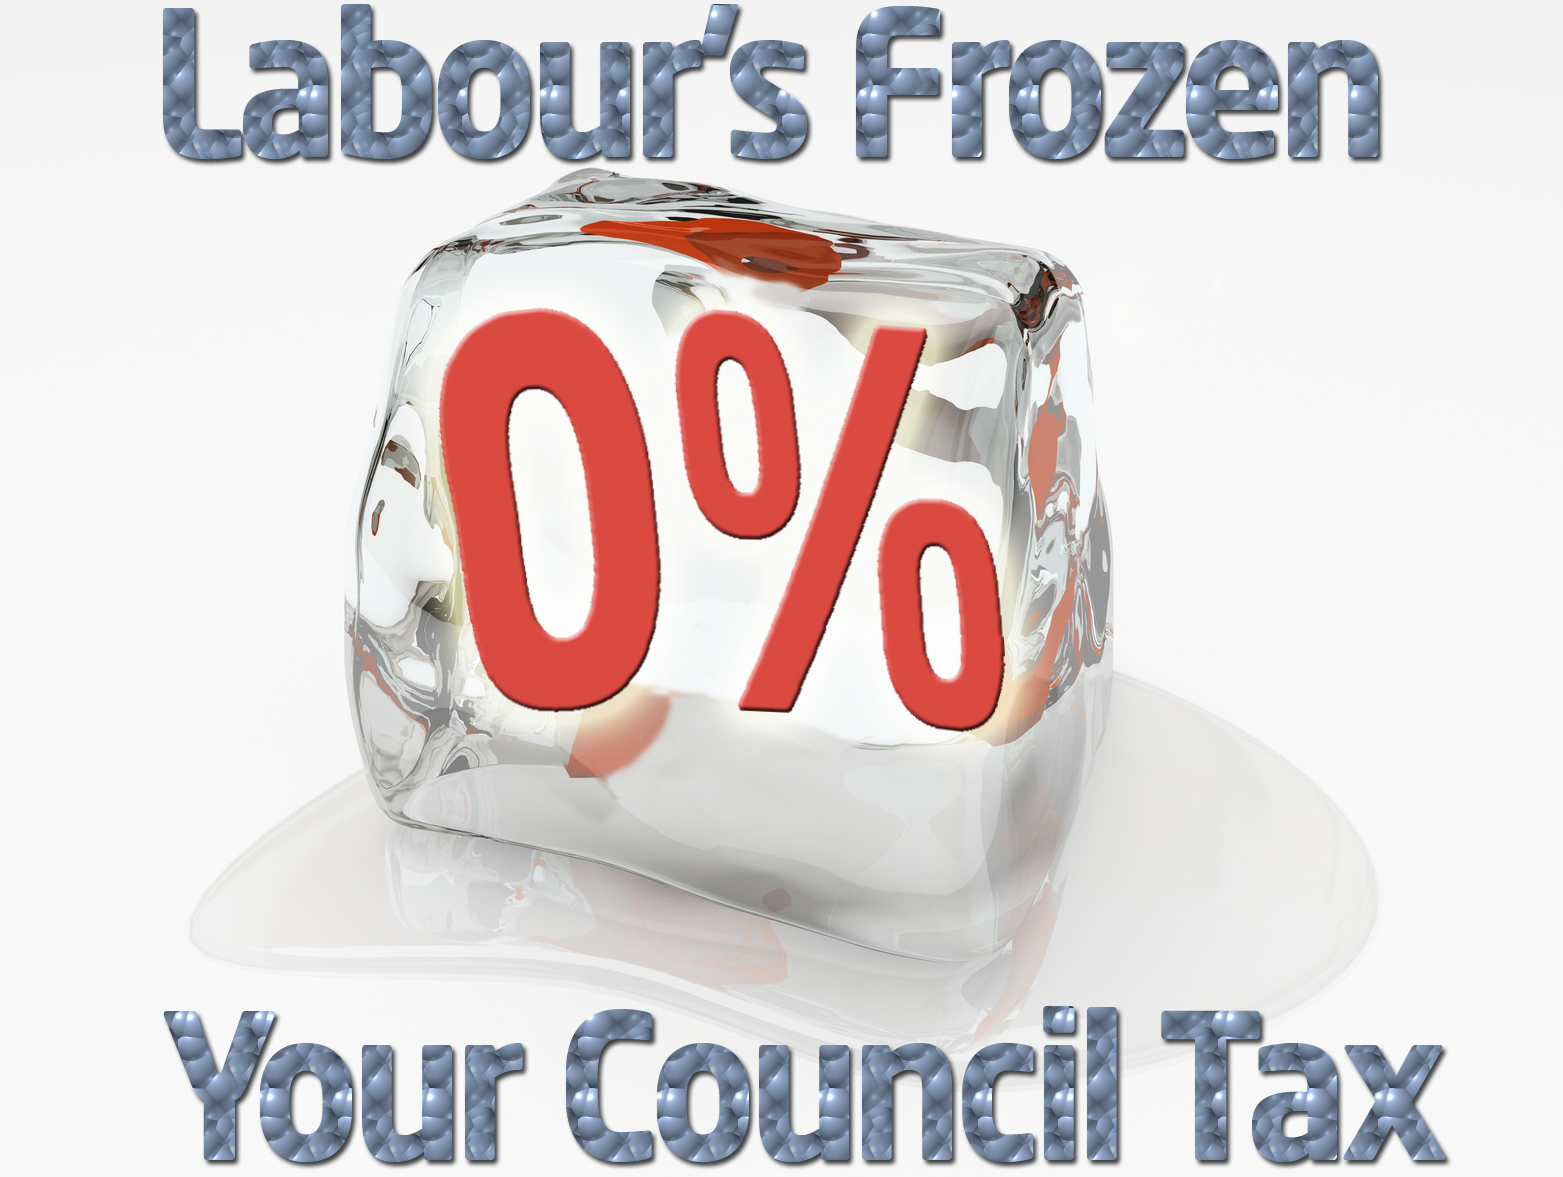 Council Tax Reduction Universal Credit Lambeth